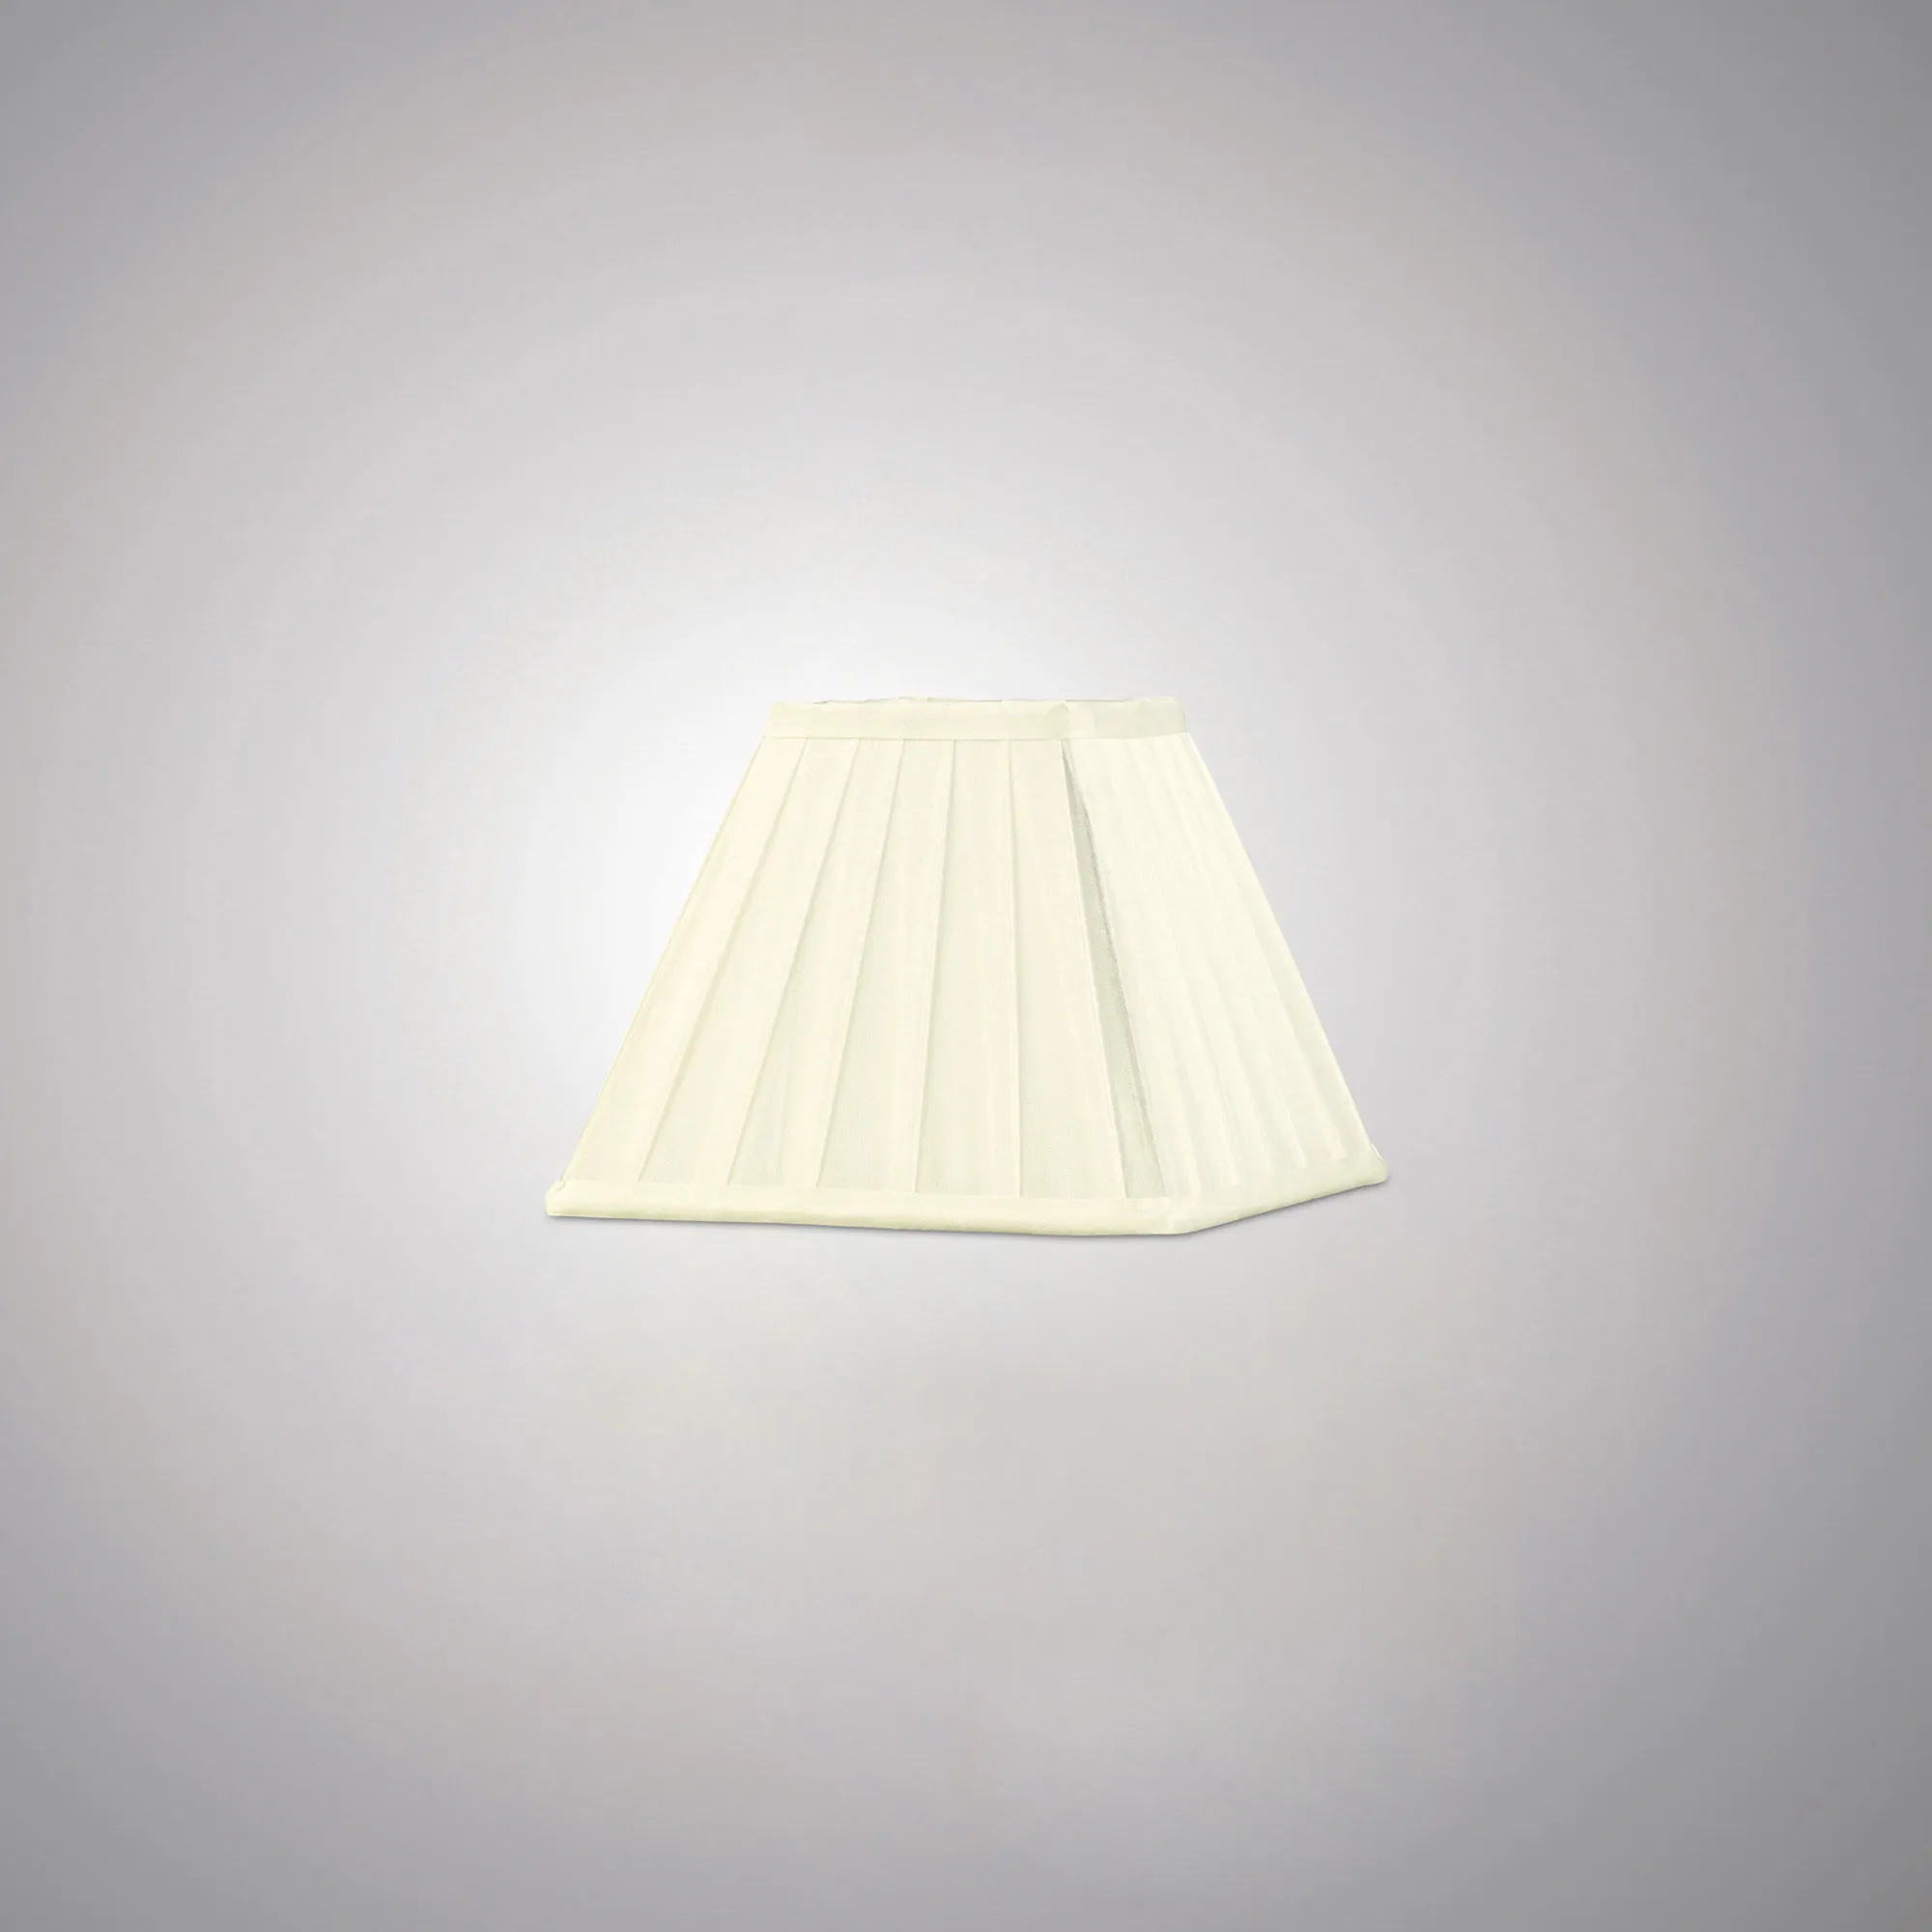 Leela Ivory Shades Diyas Table & Floor Lamp Shades